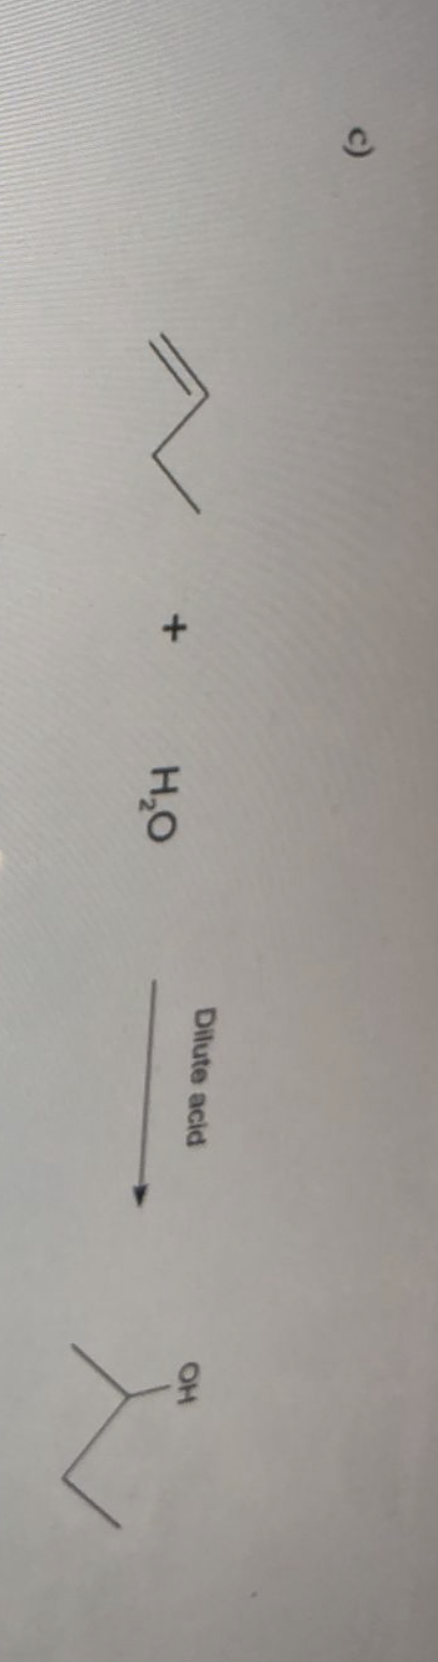 H₂O
Dilute acid
OH
ï